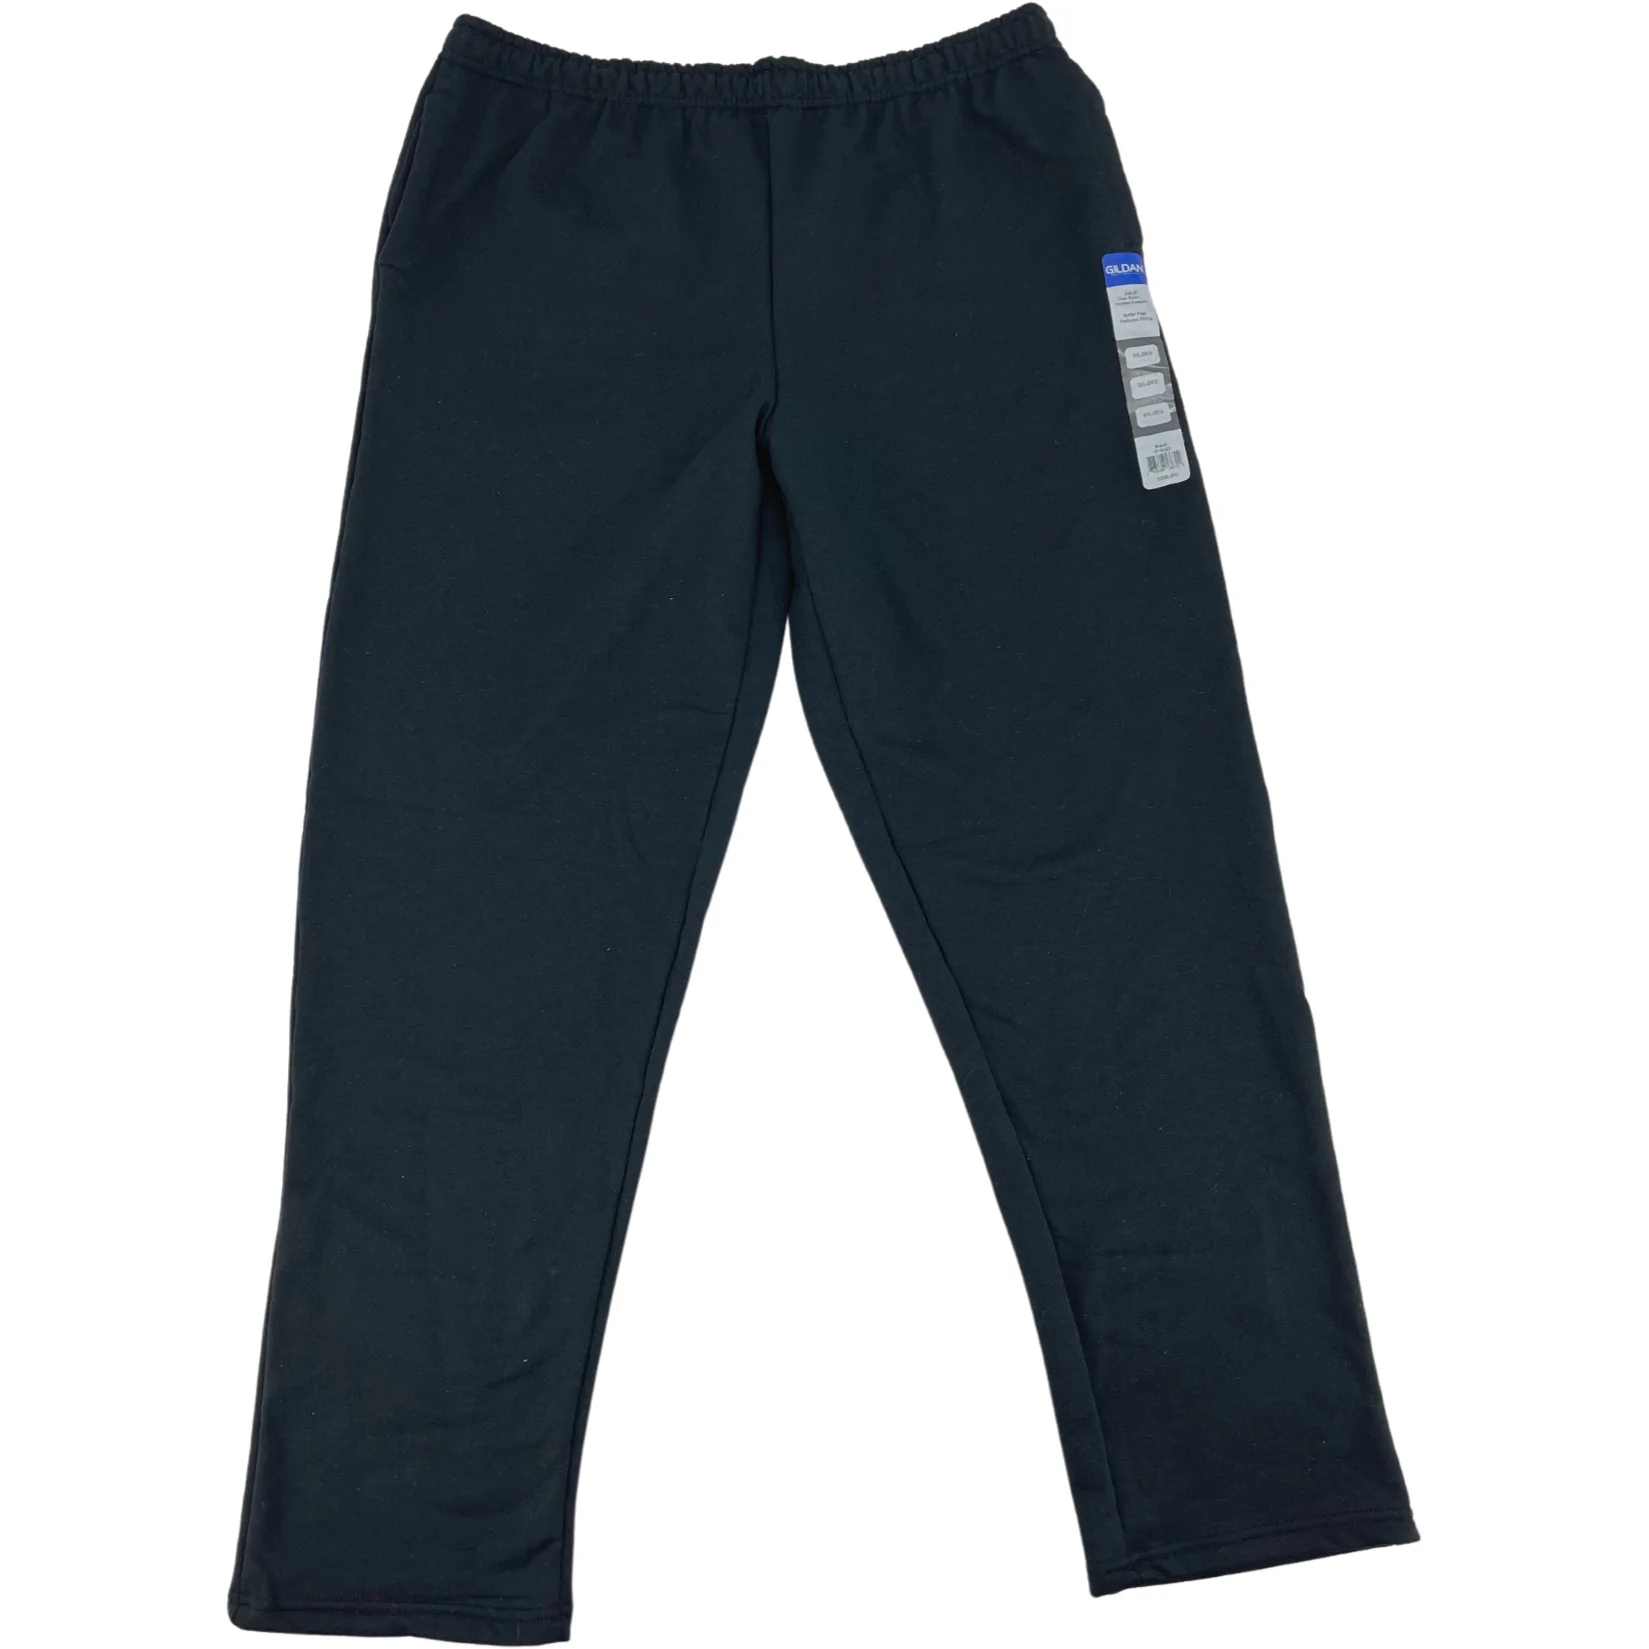 Gildan Unisex Sweatpants / Adult / Black / Size 2XL